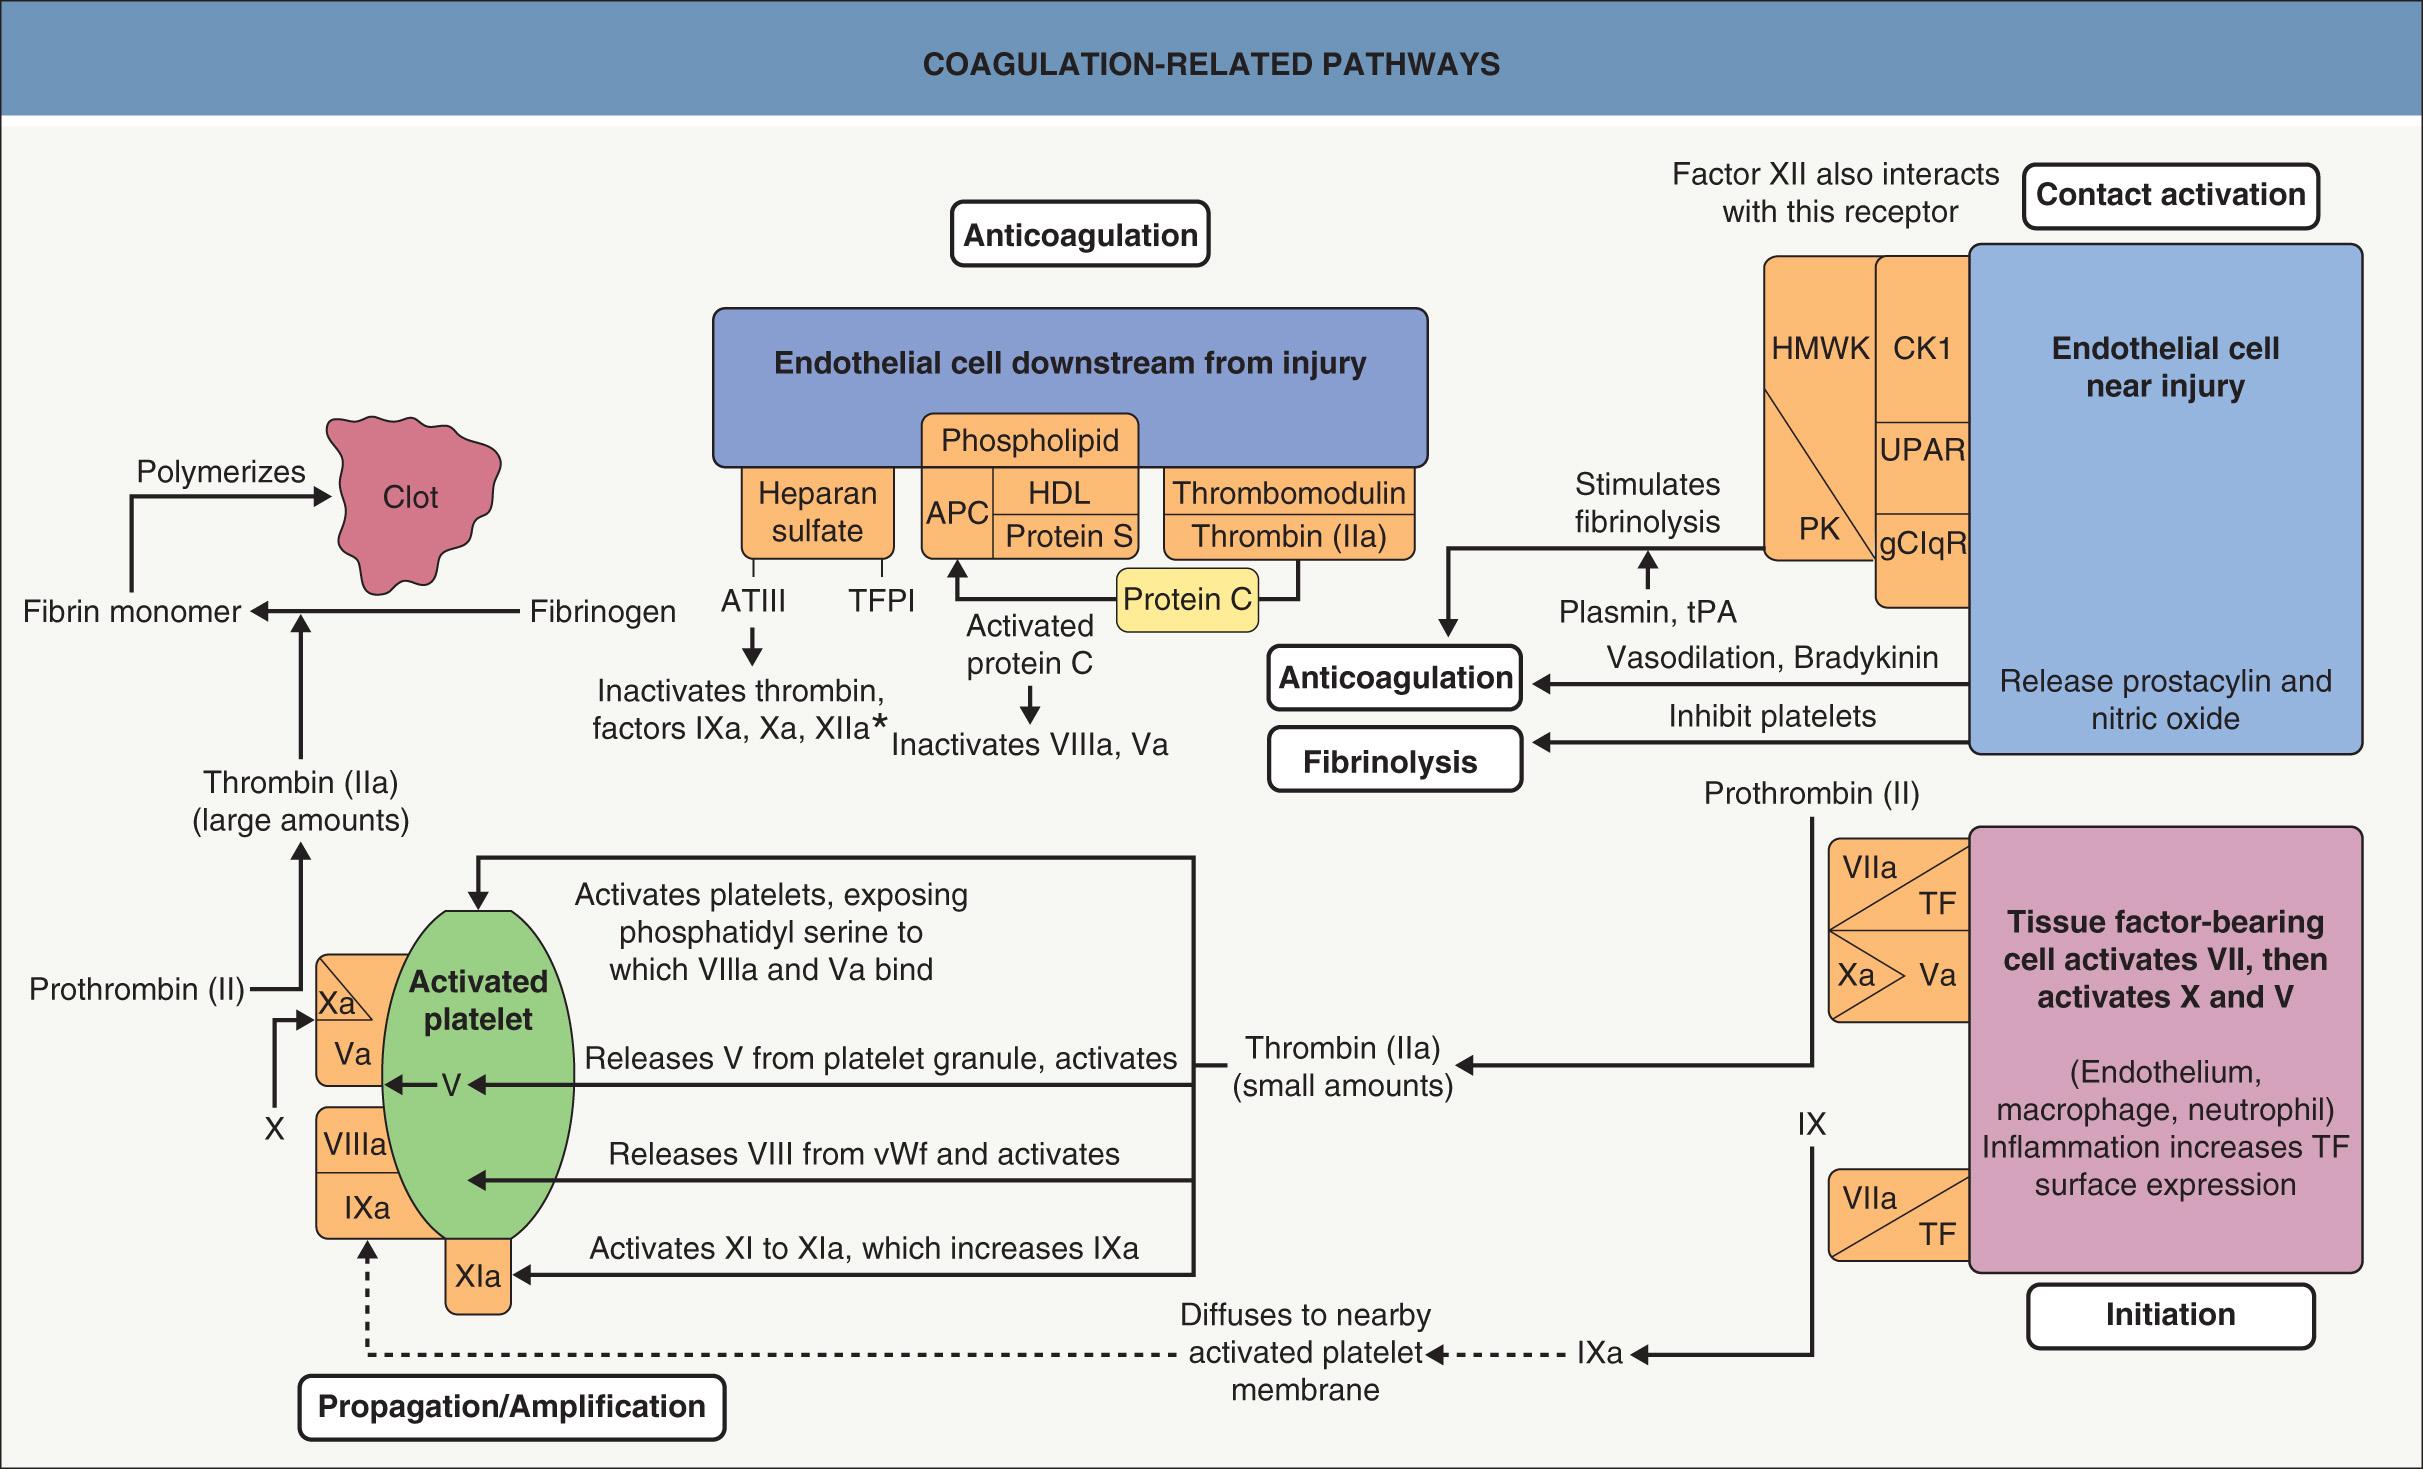 Fig. 22.4, Coagulation-related pathways.